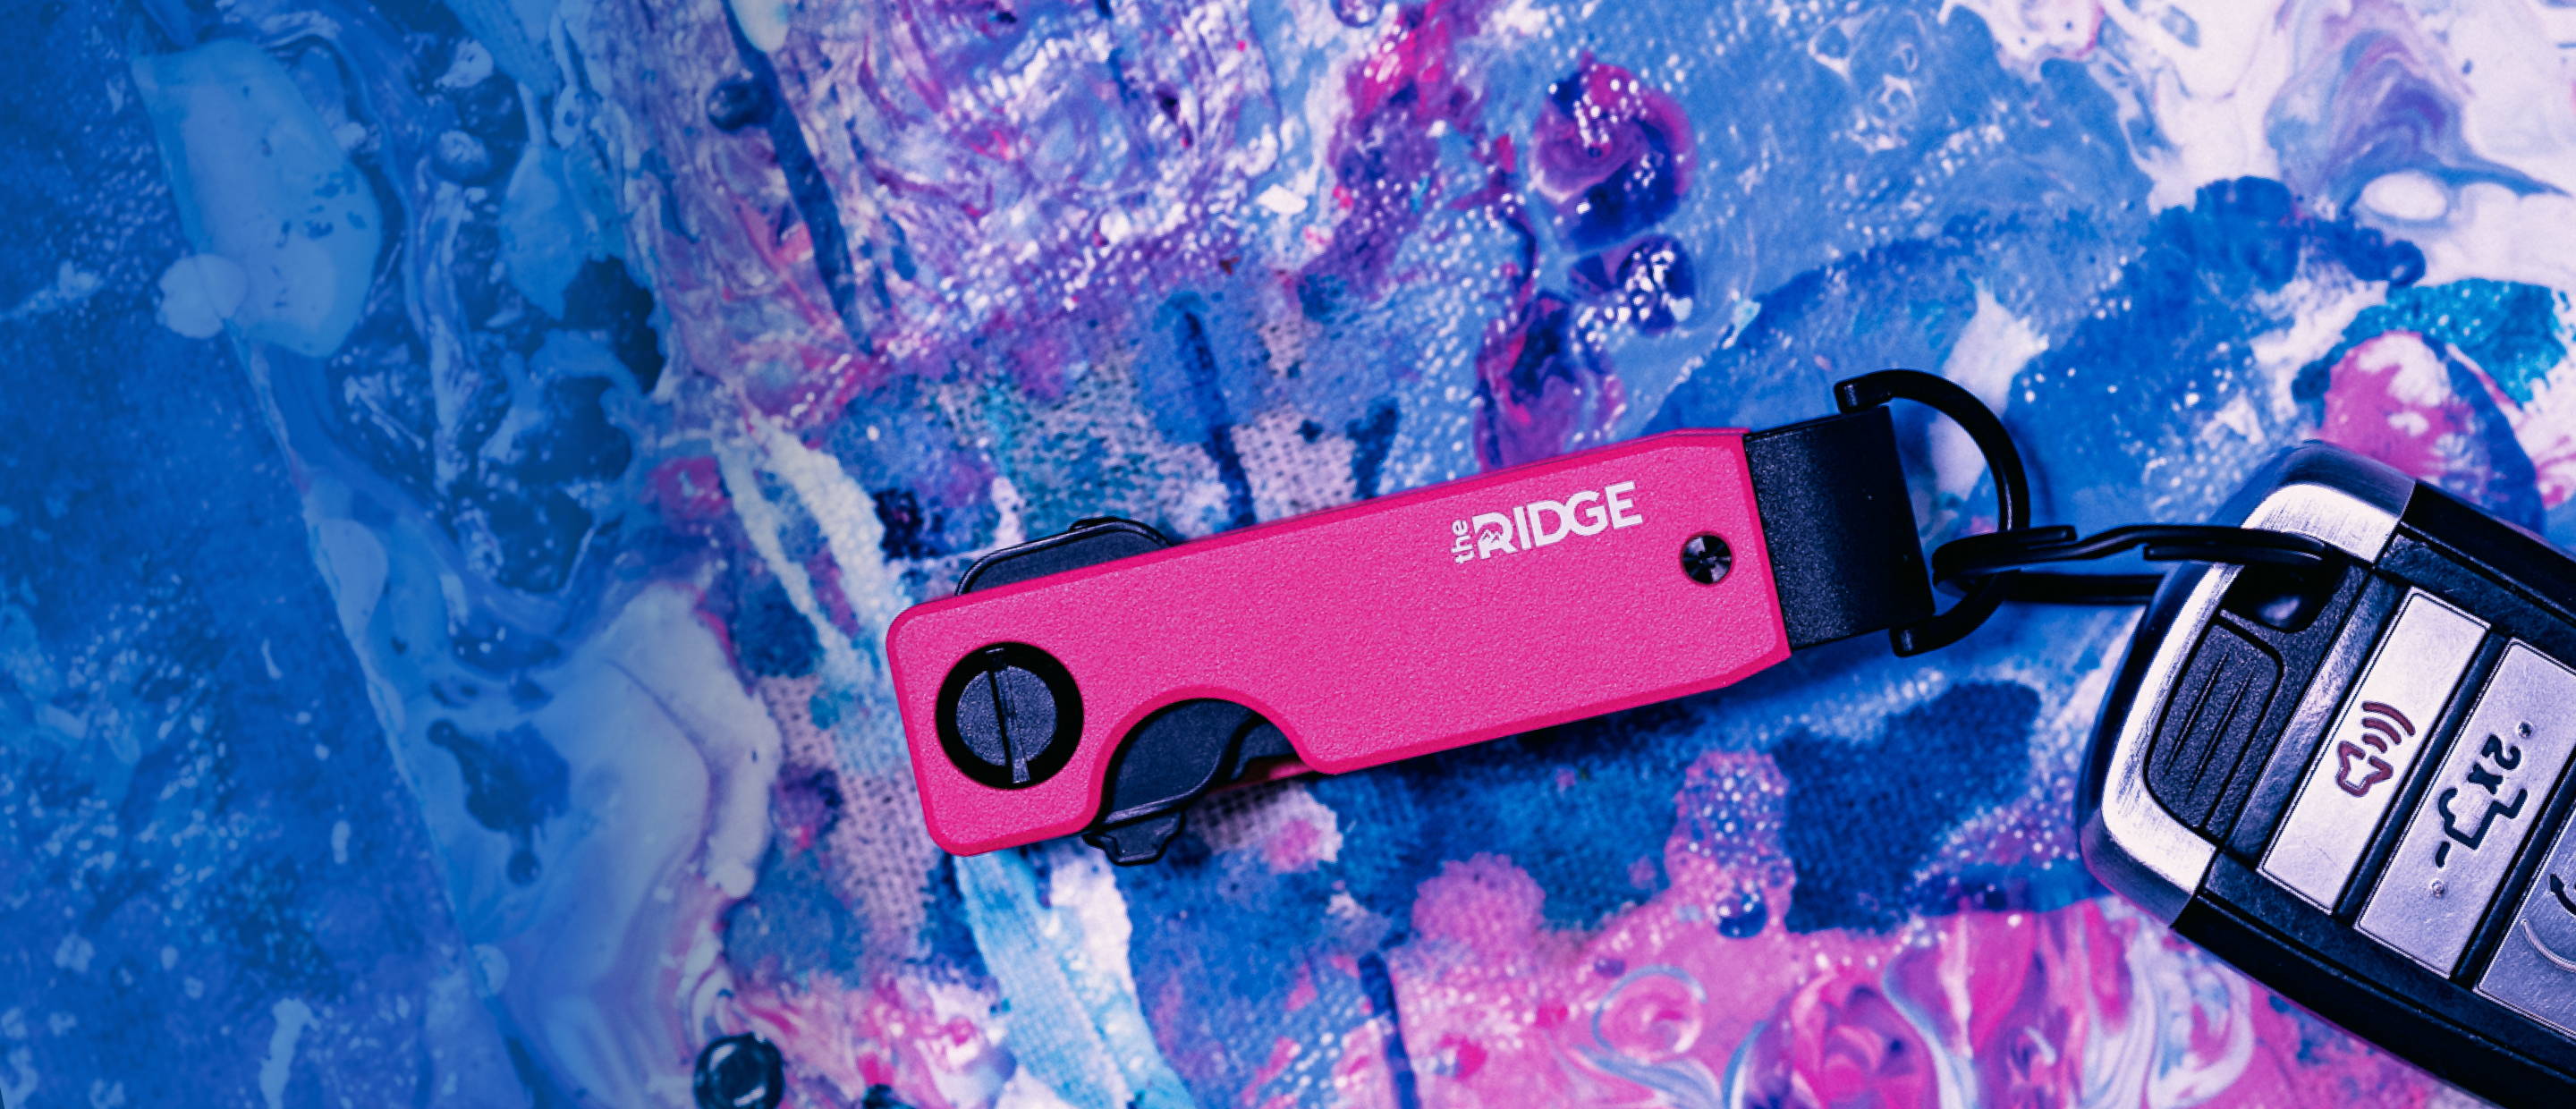 Ridge Flamingo Pink Keycase with car key